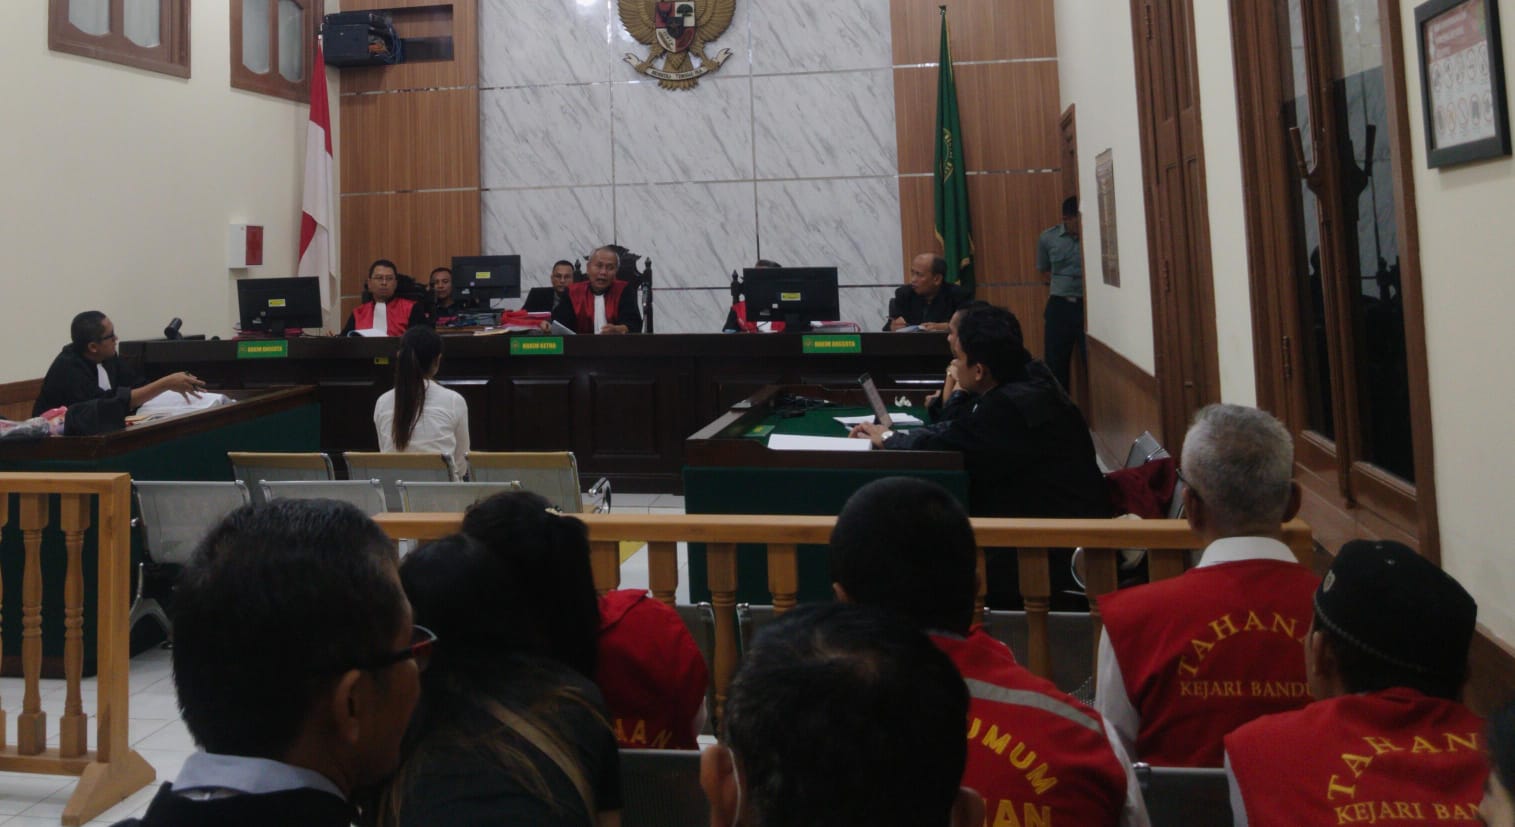 Sidang Kasus Penggelapan Rumah Mewah di PN Bandung Kembali Ditunda, Begini Kata Kuasa Hukum Terdakwa